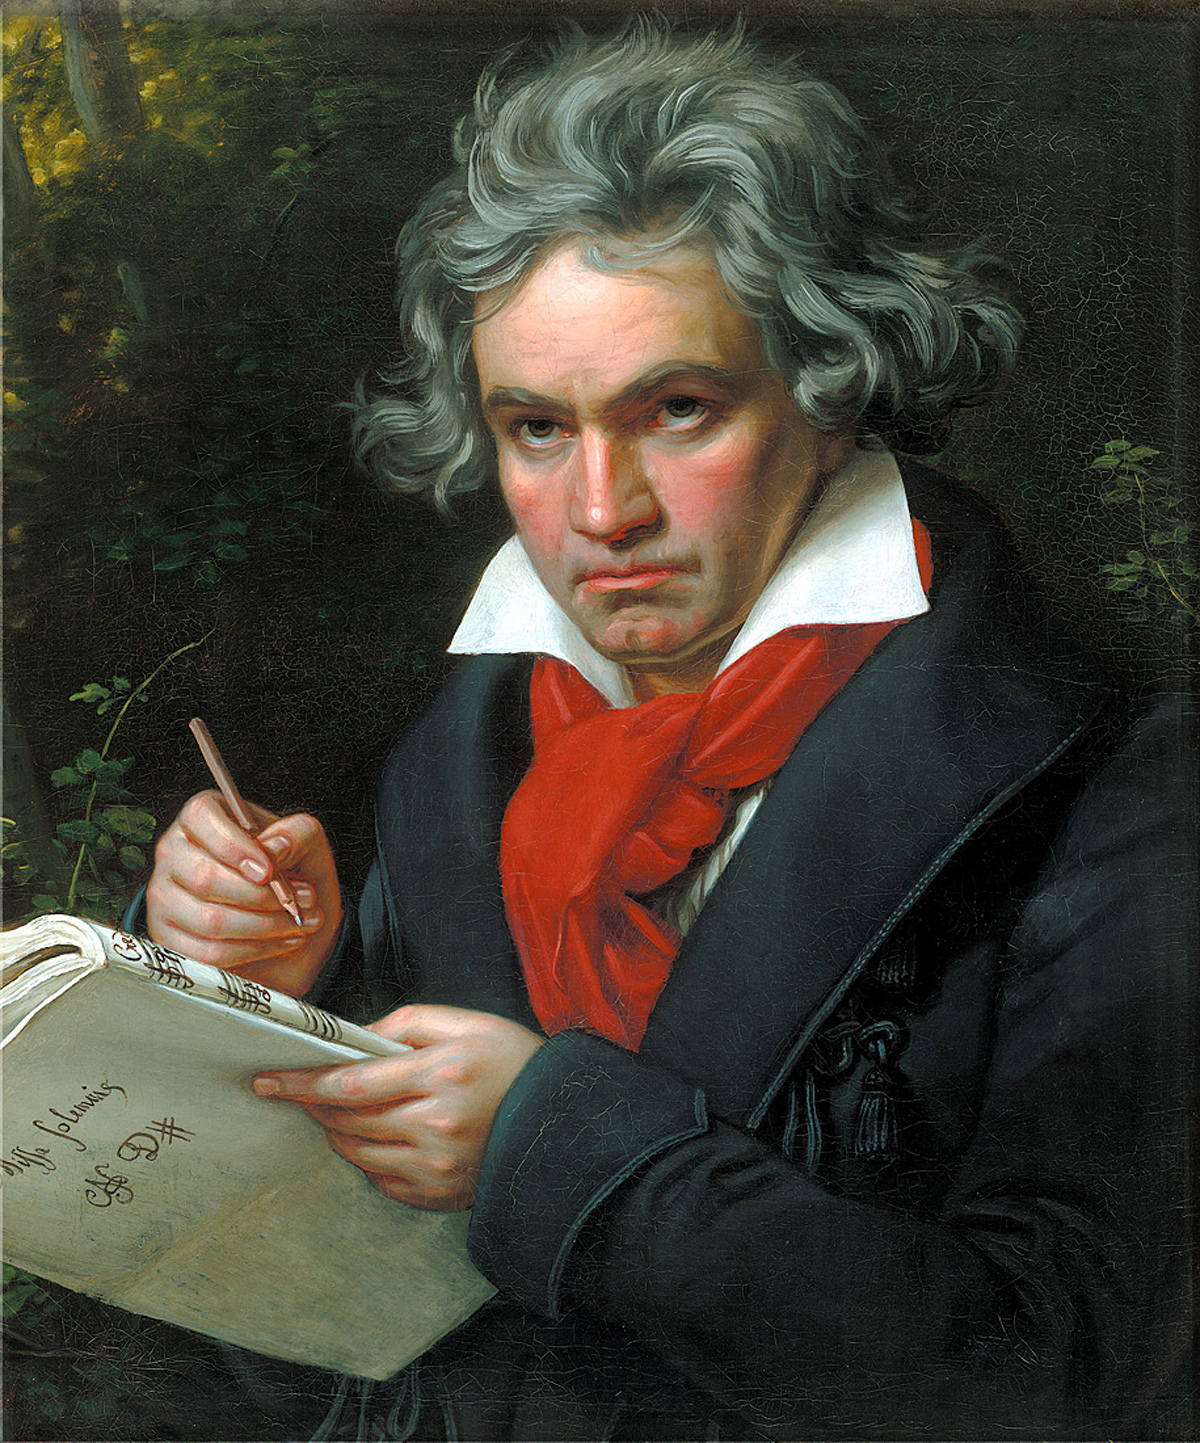 La Novena sinfonía de Beethoven cumple dos siglos